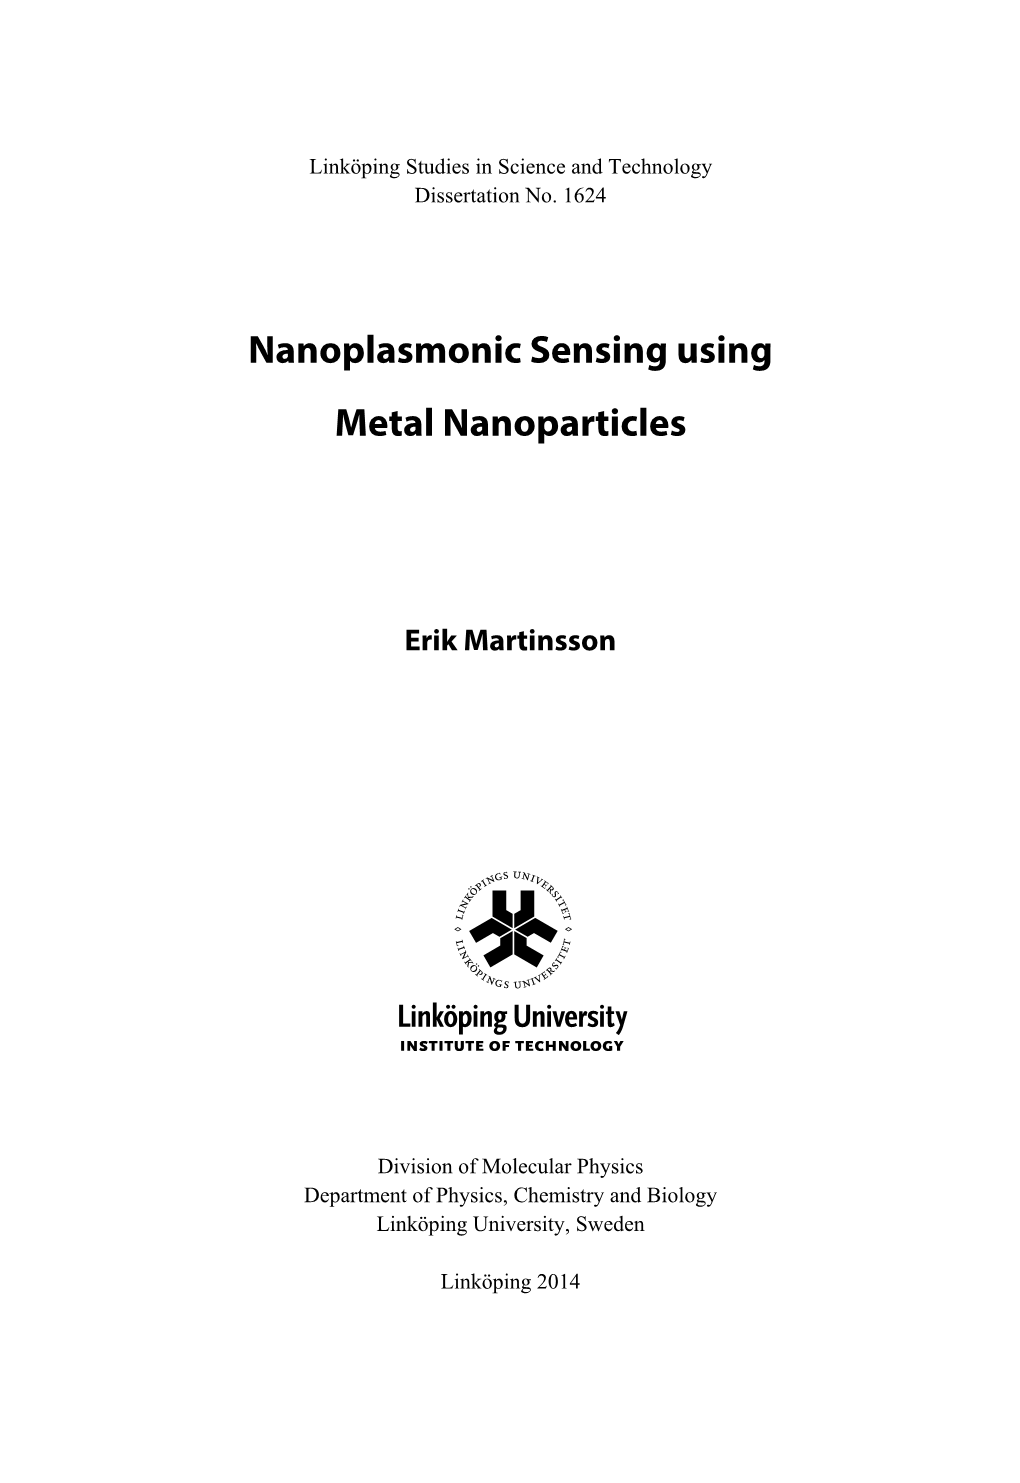 Nanoplasmonic Sensing Using Metal Nanoparticles